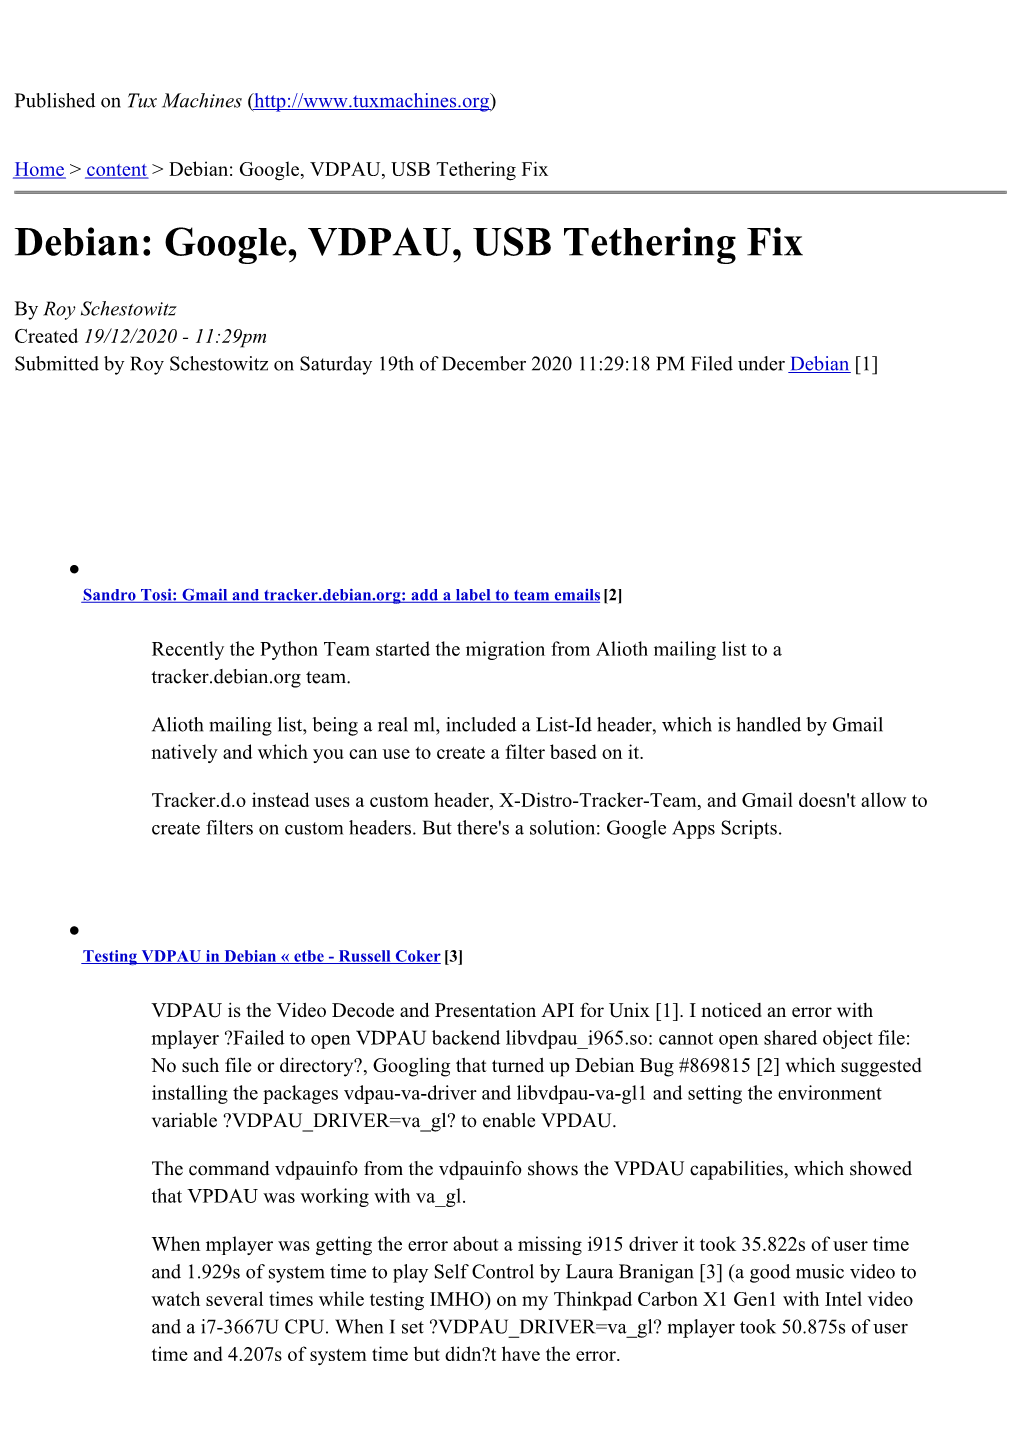 Debian: Google, VDPAU, USB Tethering Fix